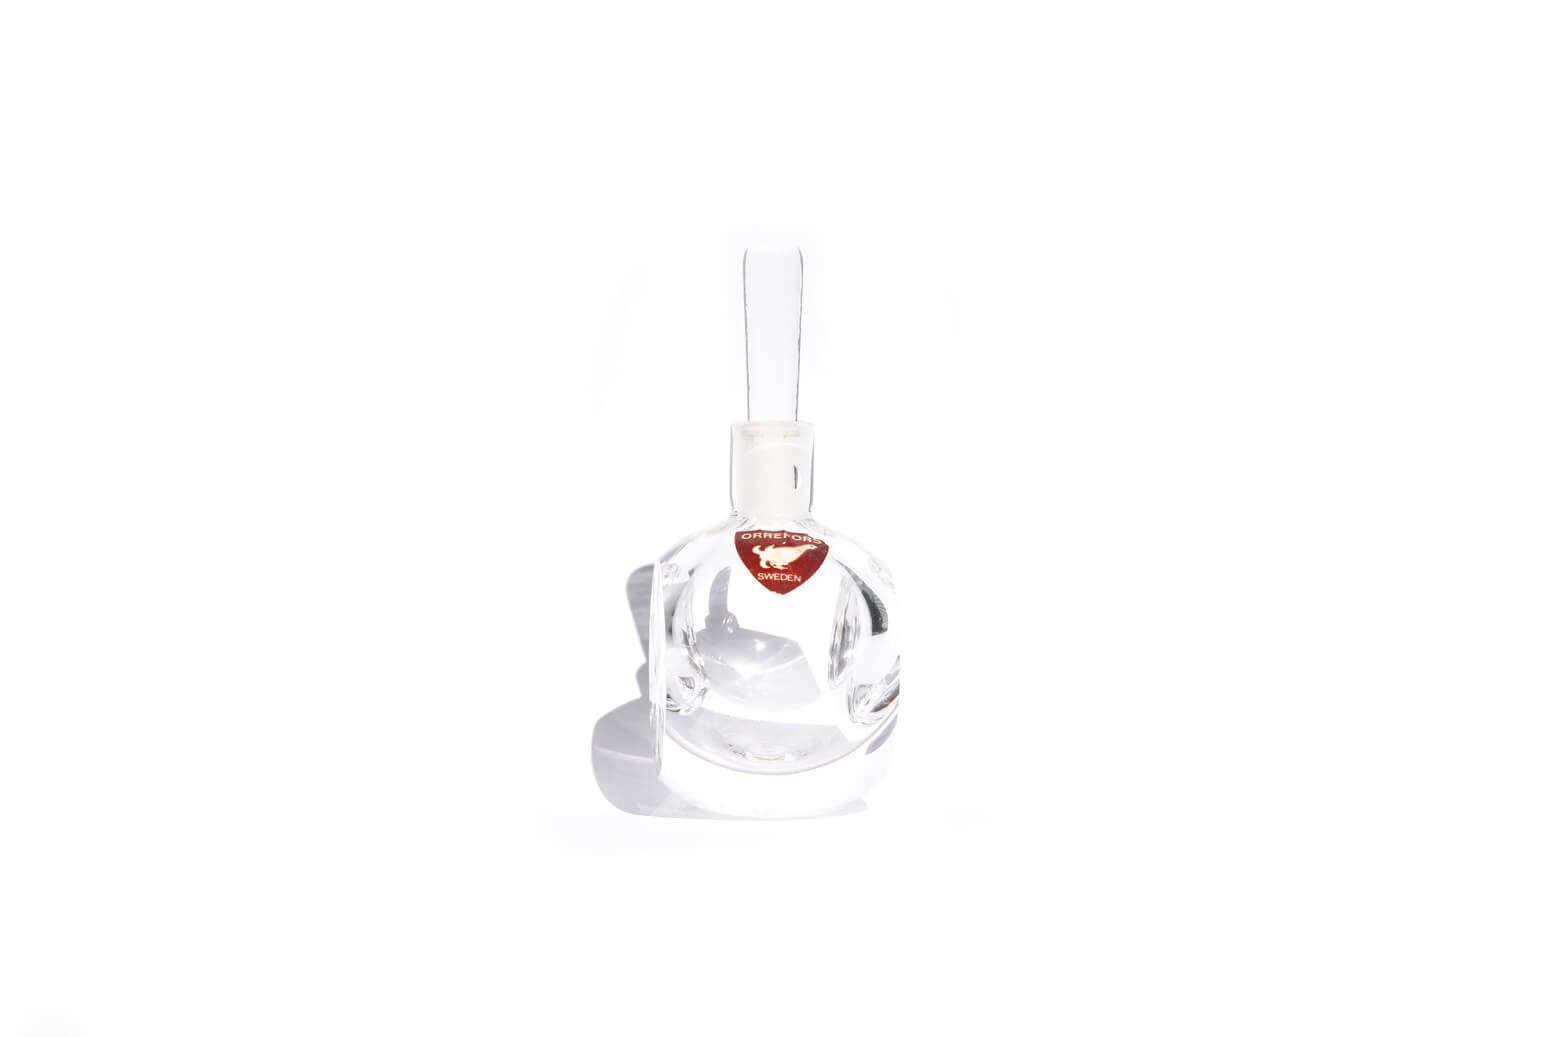 Orrefors Glass Perfume Bottle/オレフォス 香水瓶 ガラス ミニチュア ヴィンテージ 北欧雑貨 スウェーデン